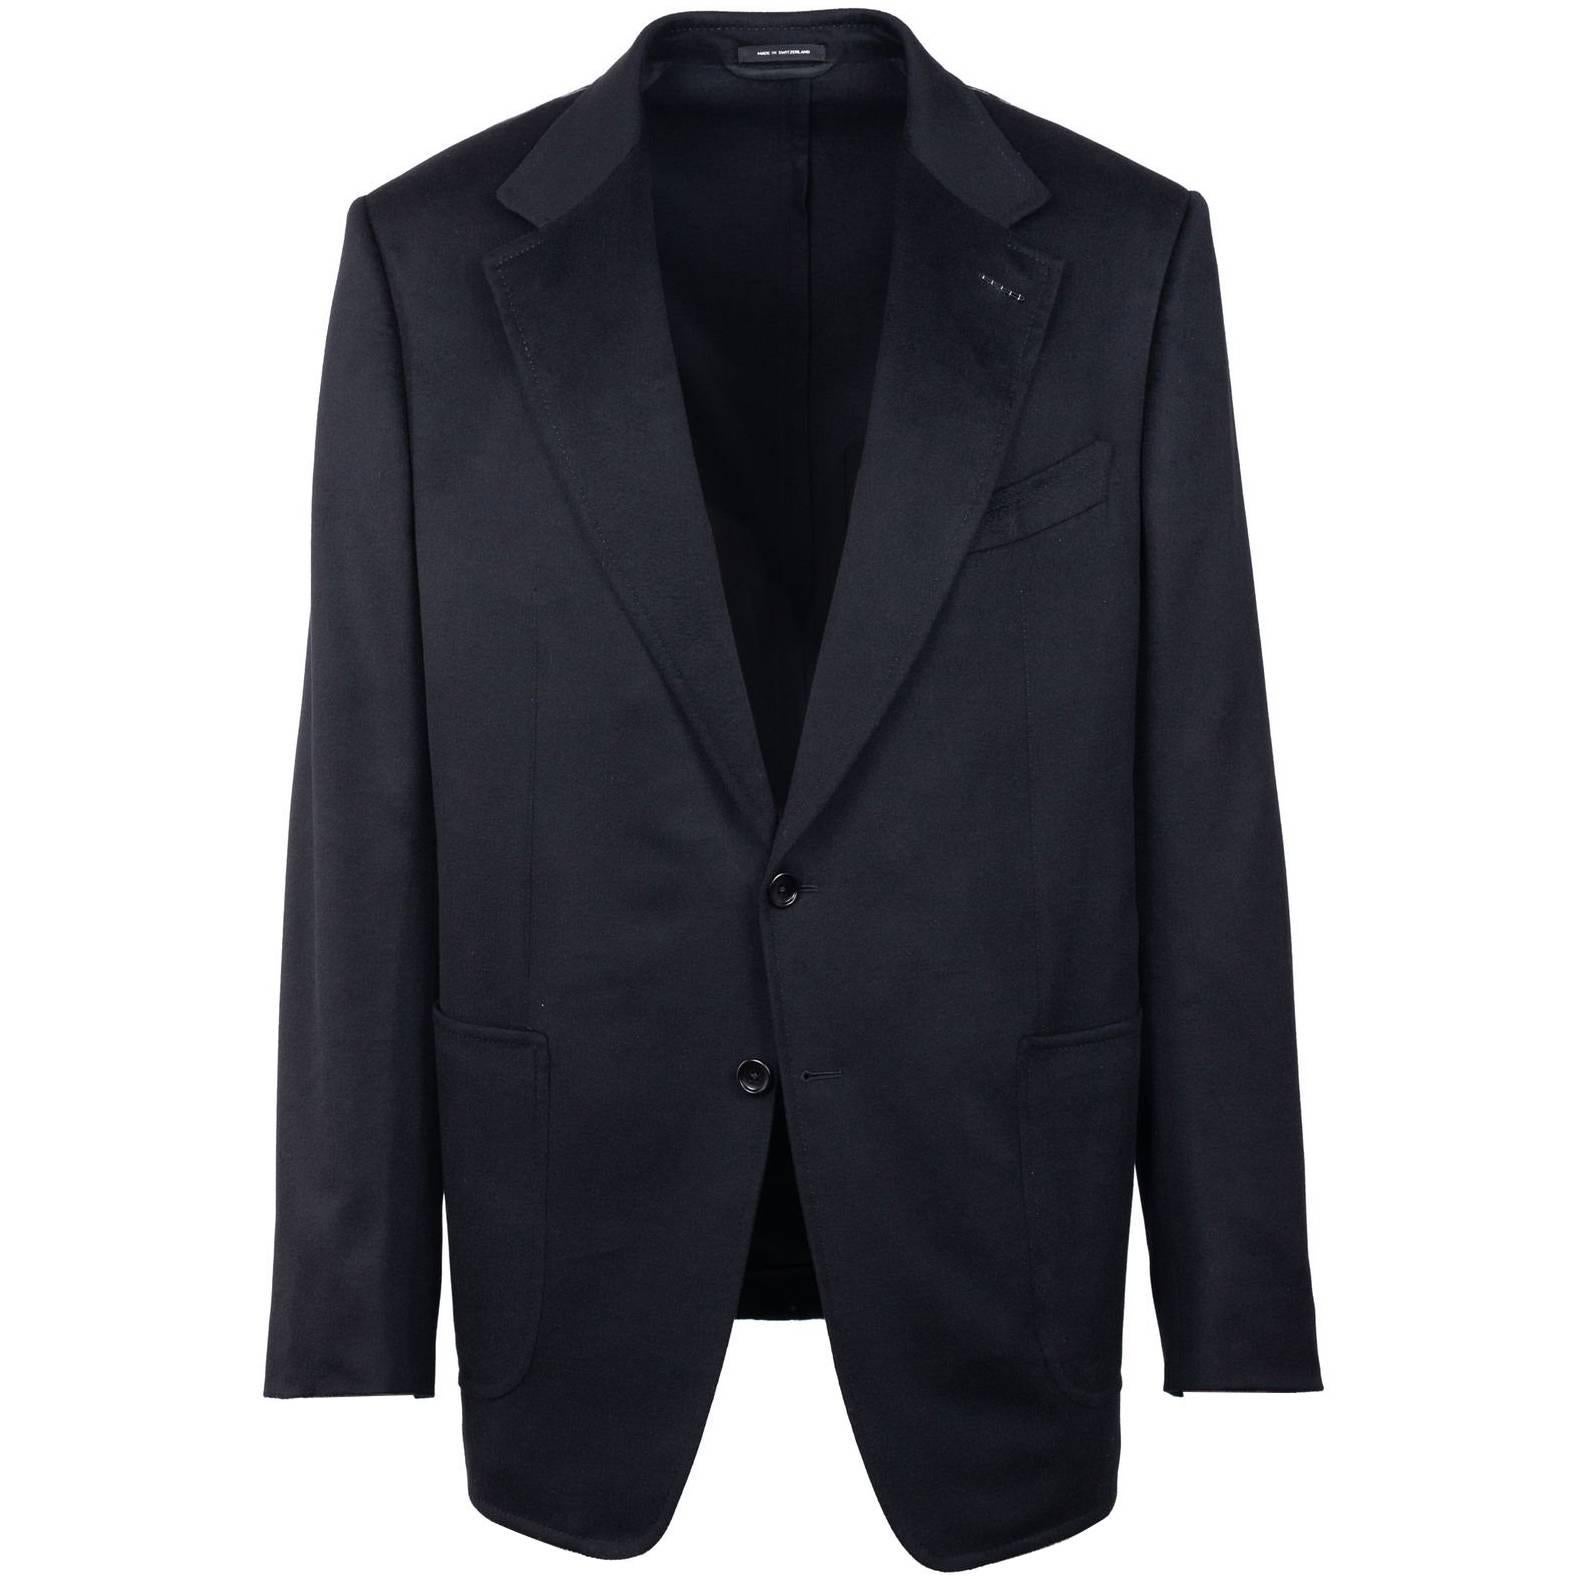 Tom Ford Black 100% Cashmere Shelton Cardigan Sports Jacket Sz 56L/46L RTL$3820 For Sale